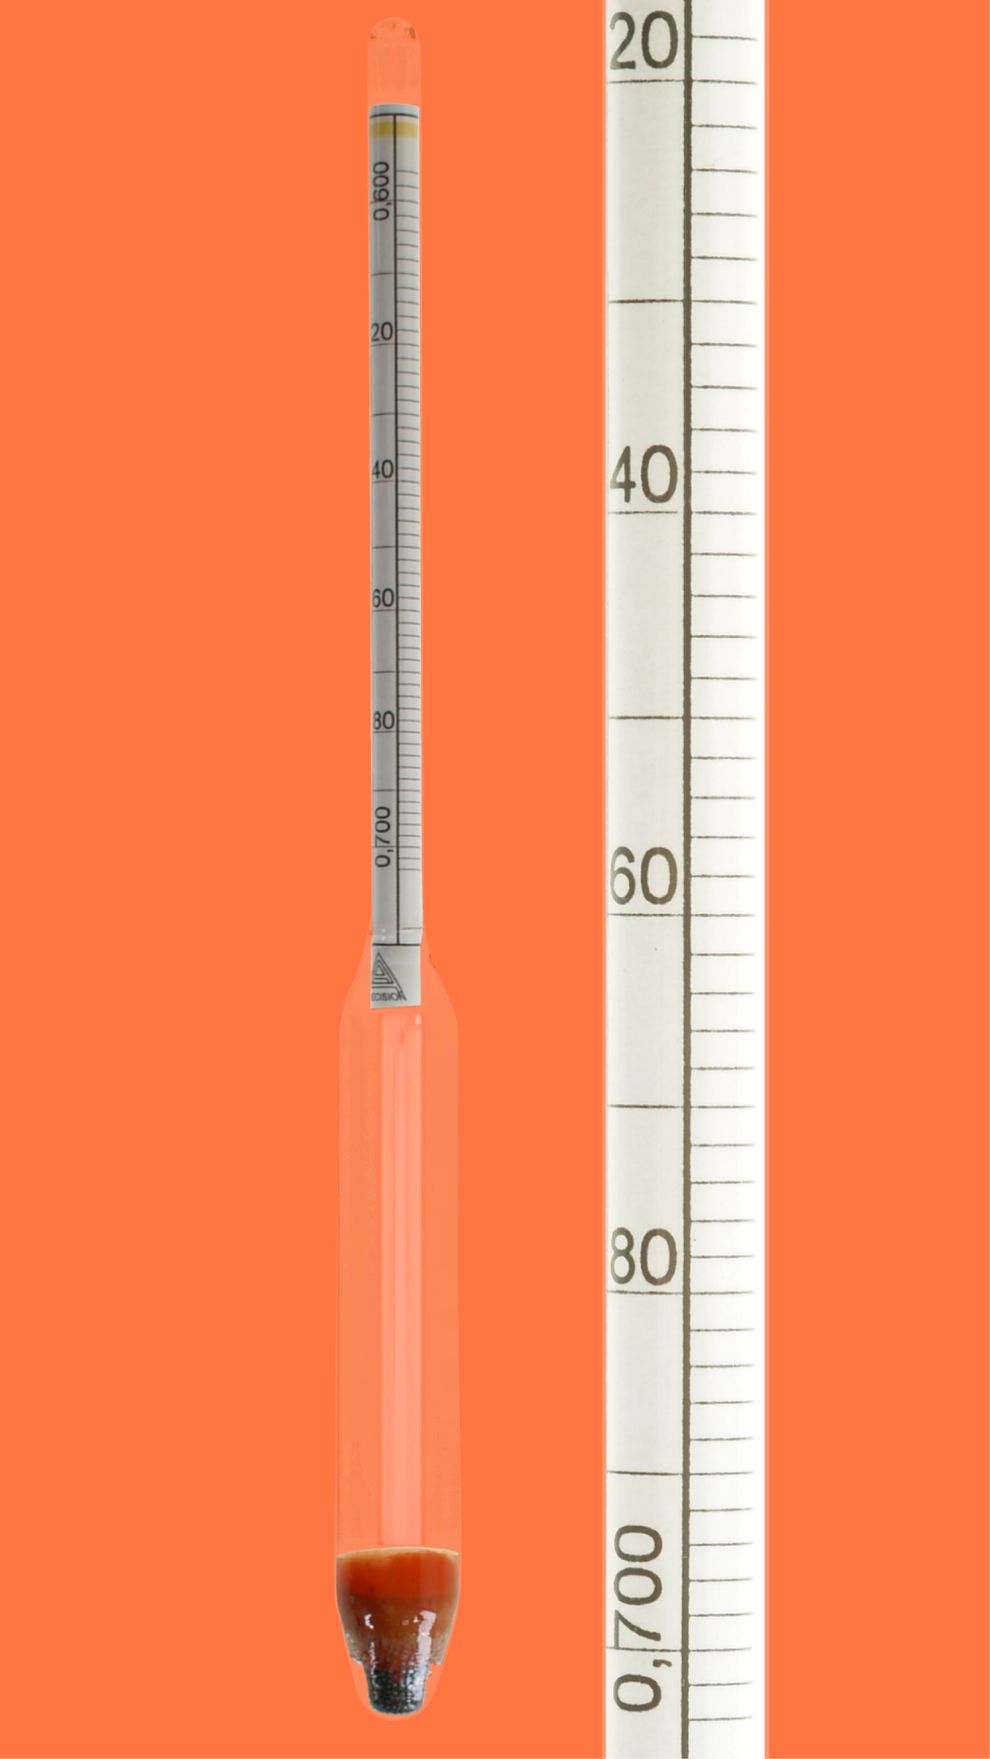 Aräometer, DIN 12791, M100, 1,40-1,50:0,0020g/cm³, Bezugstemp. 20°C, ohne Thermometer